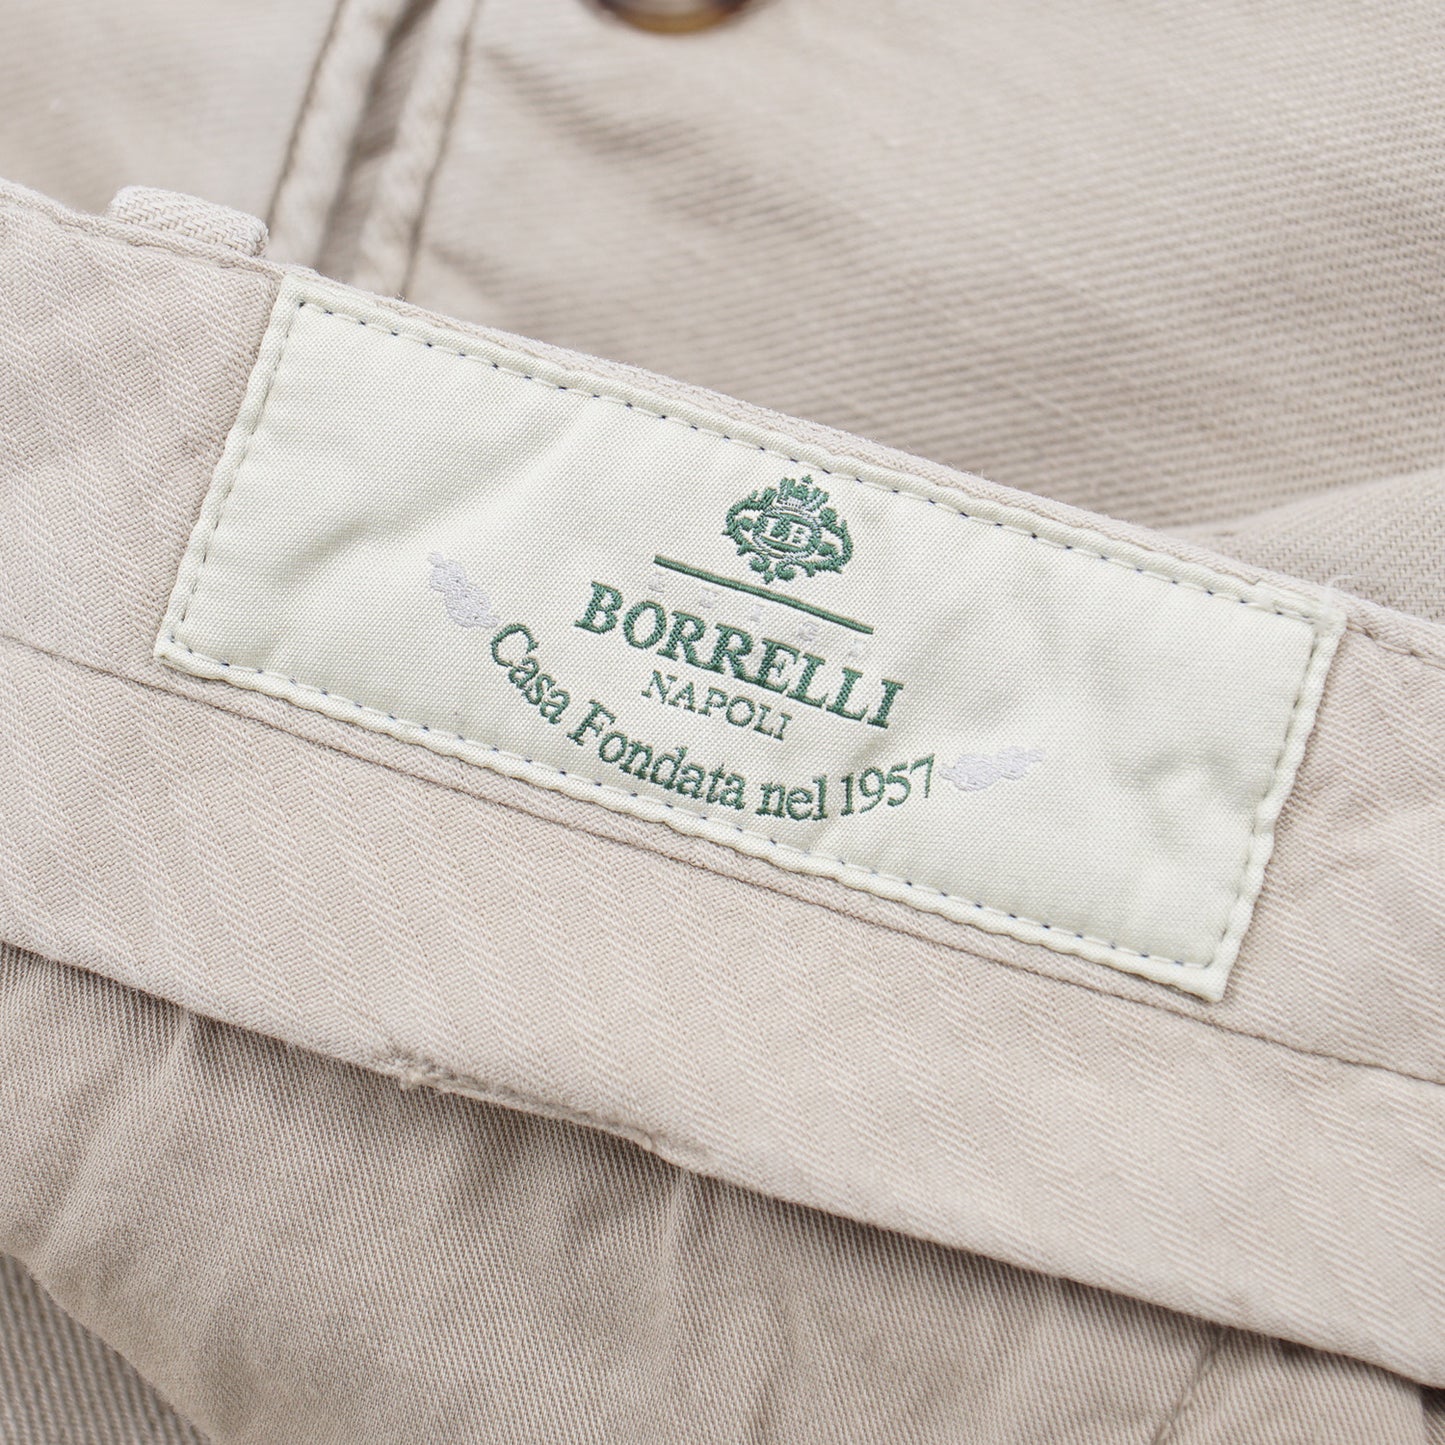 Luigi Borrelli Slim-Fit Linen and Cotton Pants - Top Shelf Apparel